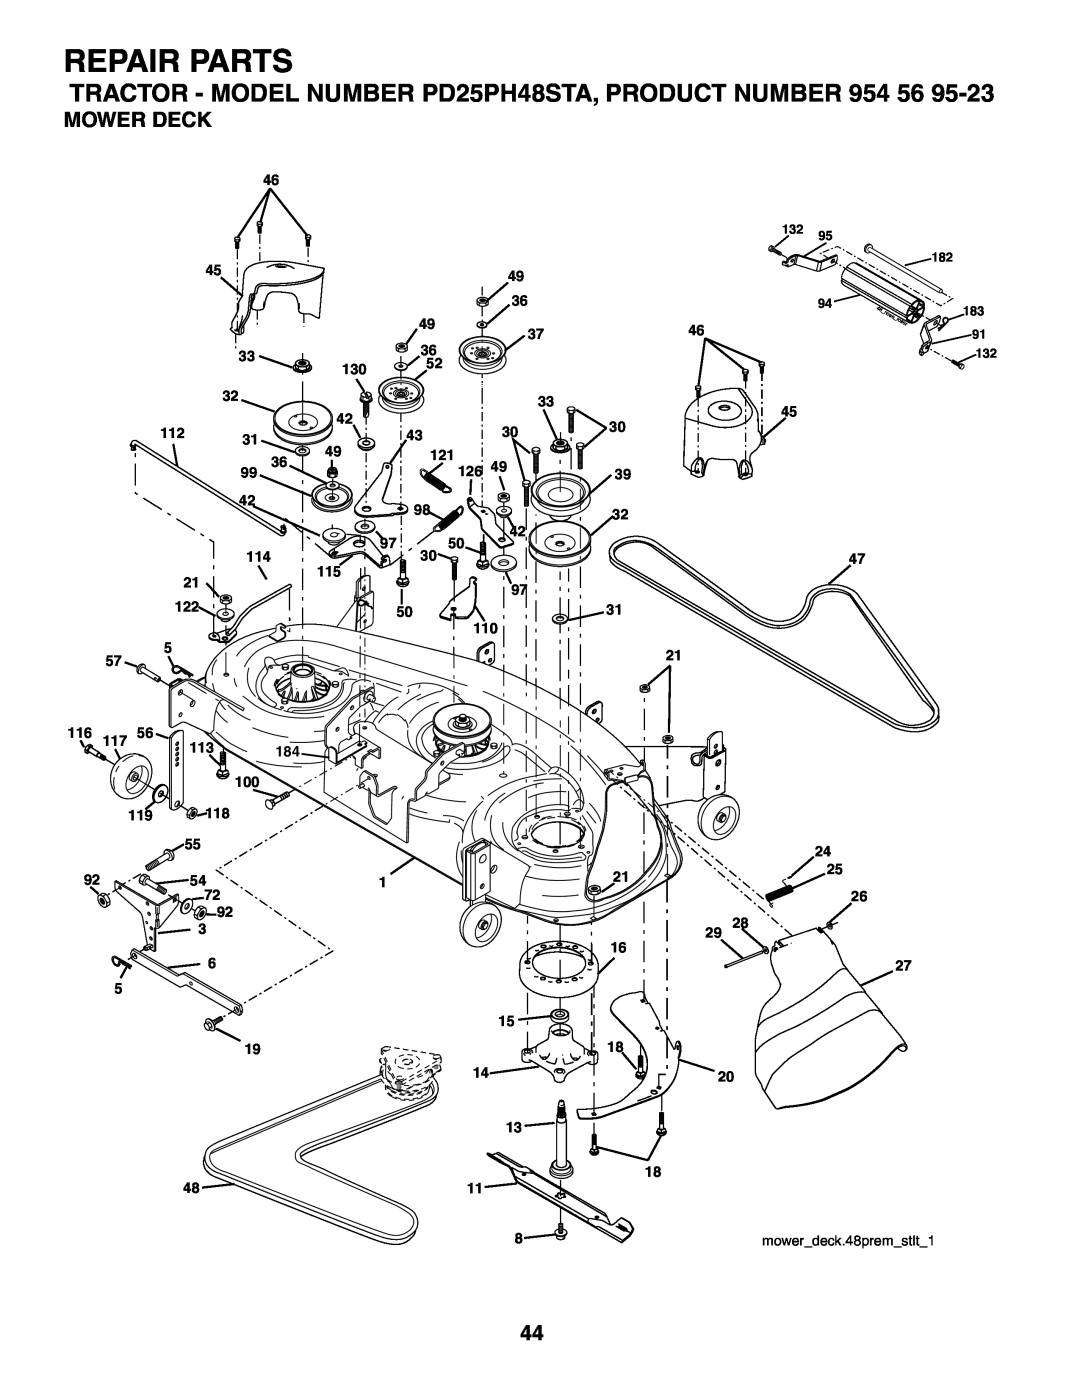 Poulan owner manual Mower Deck, Repair Parts, TRACTOR - MODEL NUMBER PD25PH48STA, PRODUCT NUMBER, mowerdeck.48premstlt1 